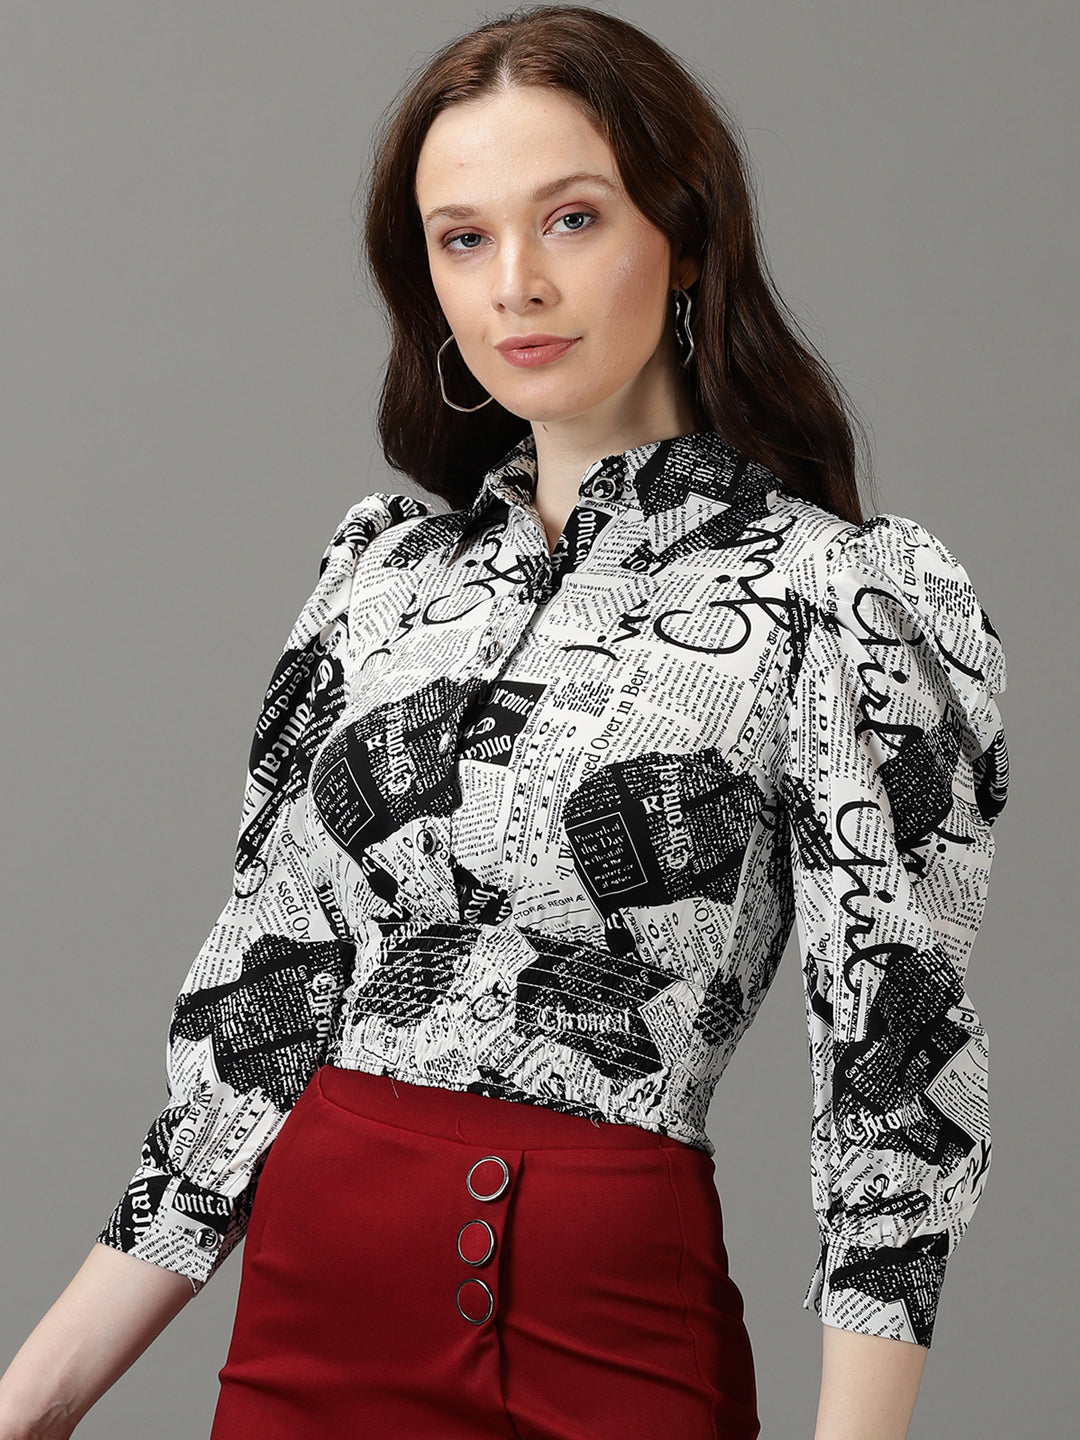 Women's White Printed Shirt Style Crop Top